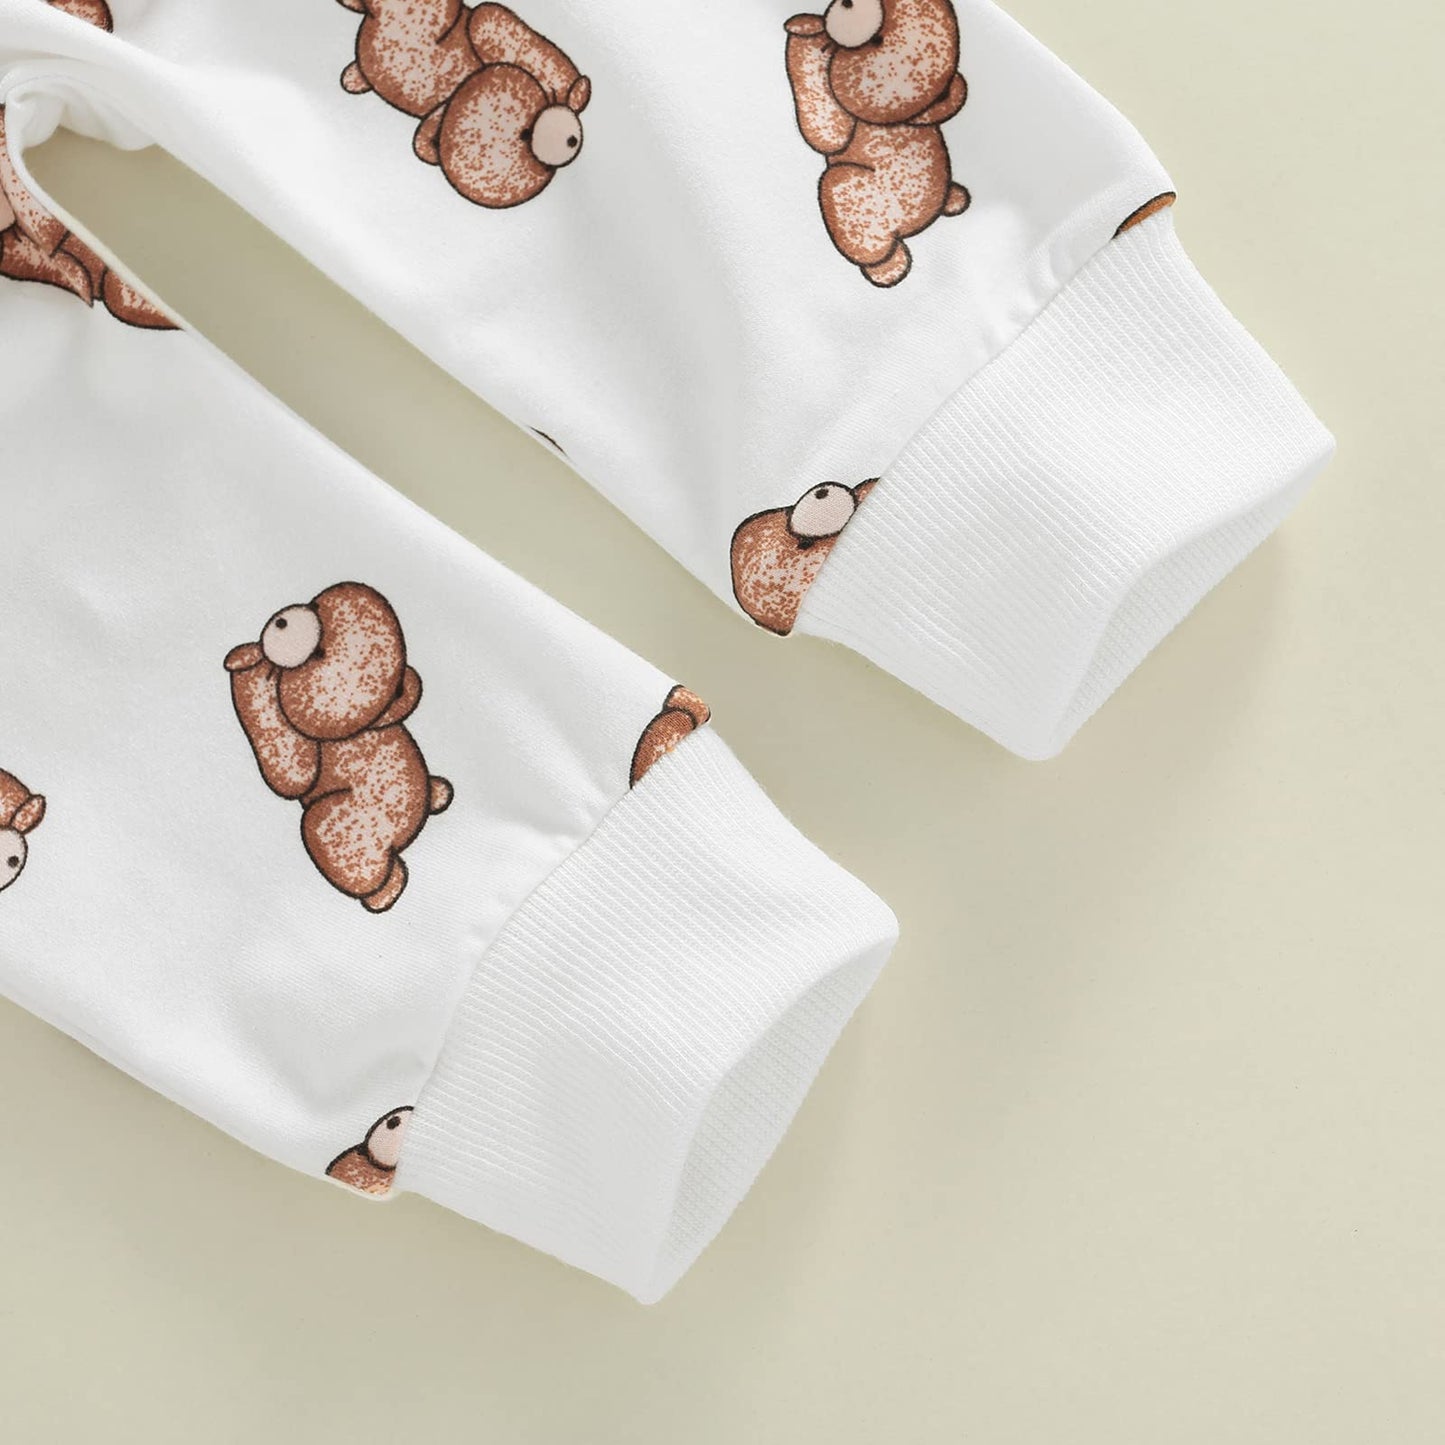 Ledy Champswiin 2pcs Winter Newborn Baby Boy Clothes Infant Dinosaur Print Outfit Ribbed Long Sleeve Tops Pants Set 0-3M